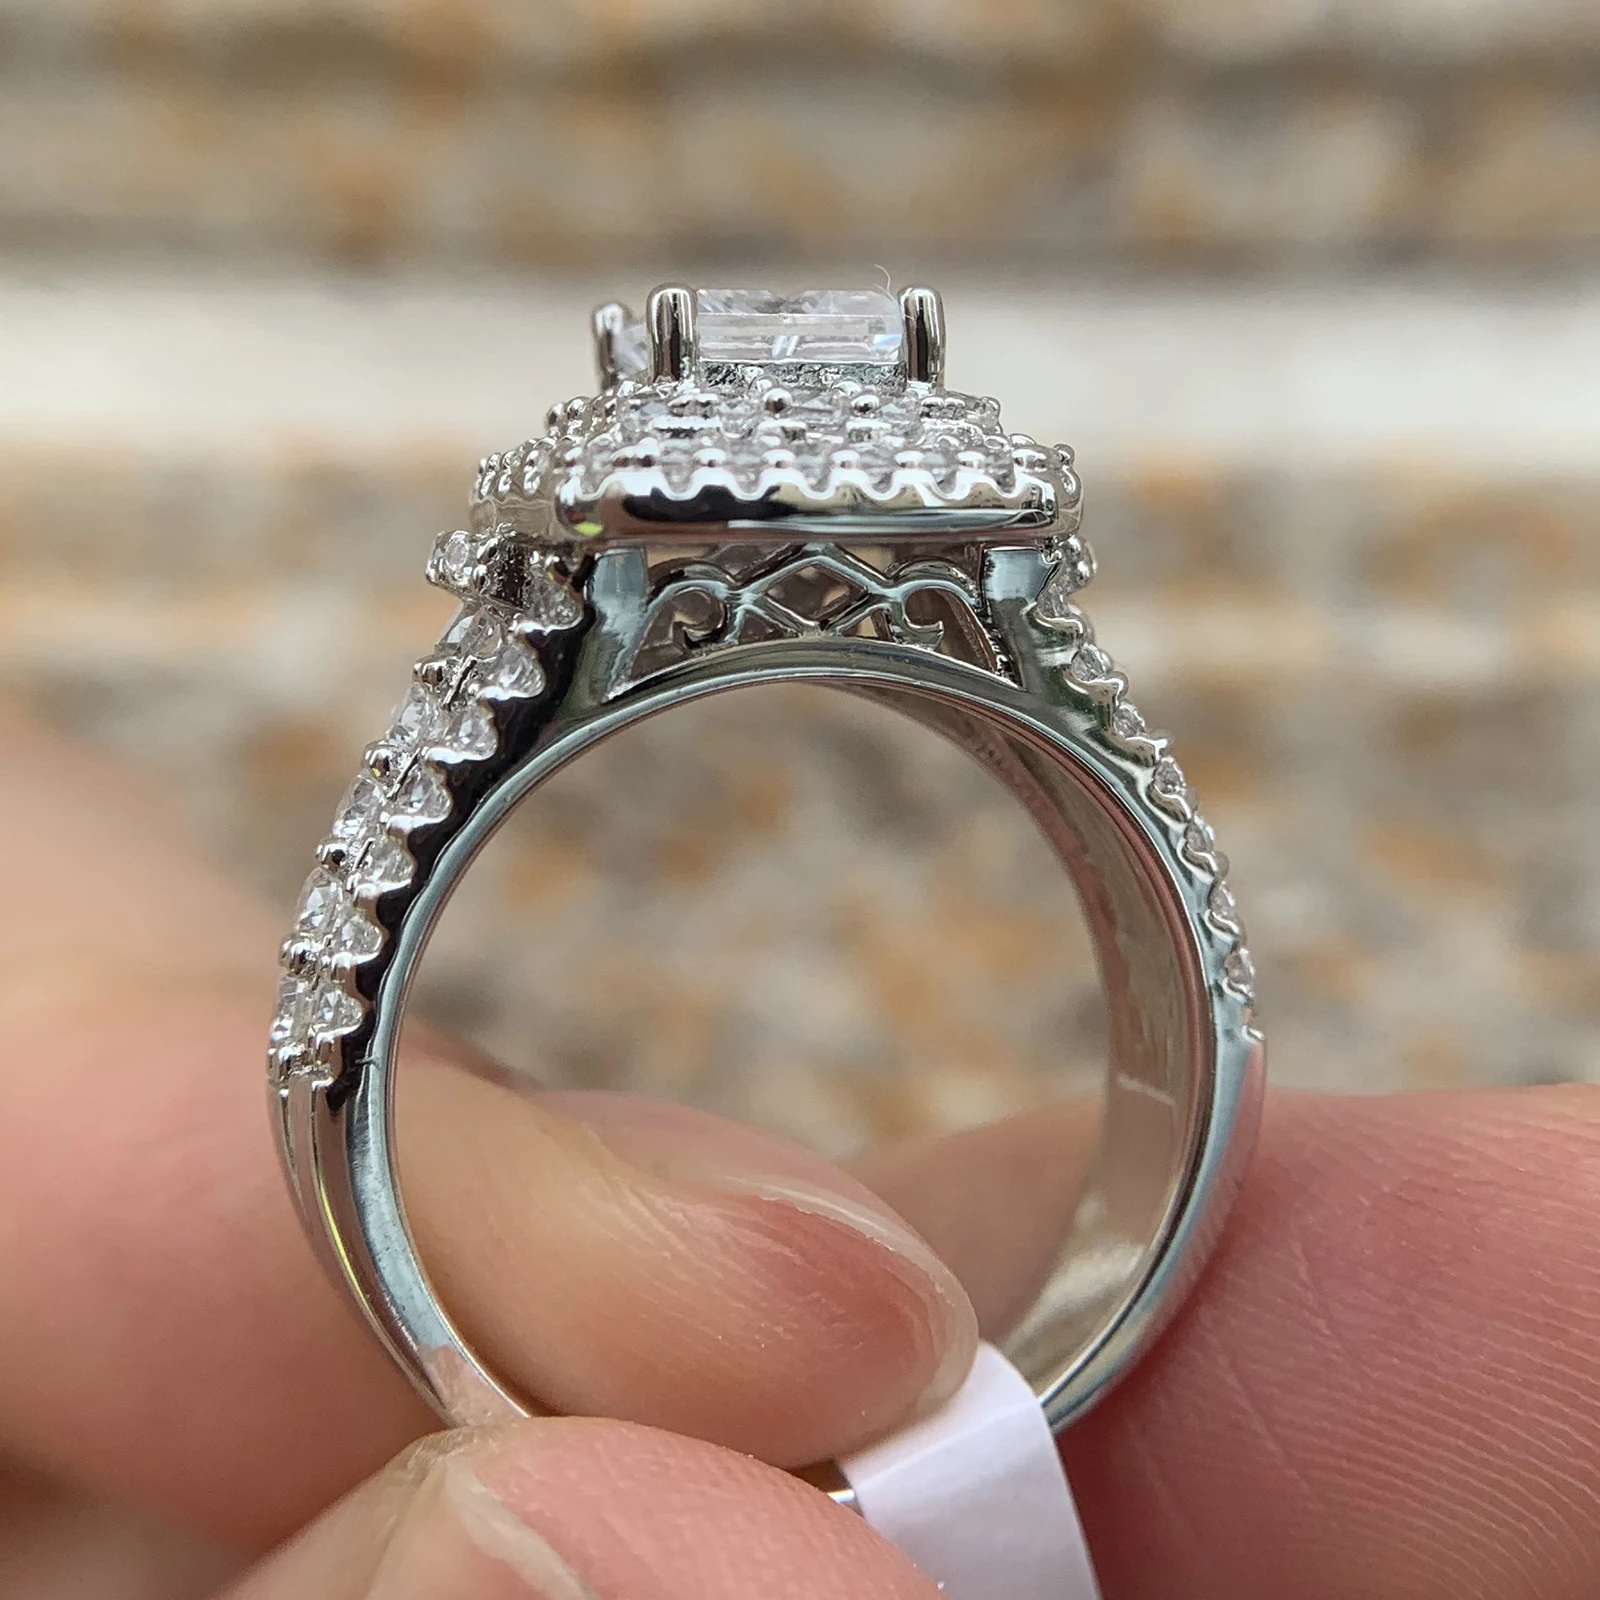 925 Sterling Silver Vintage Cross Ring Size 9.25 | eBay